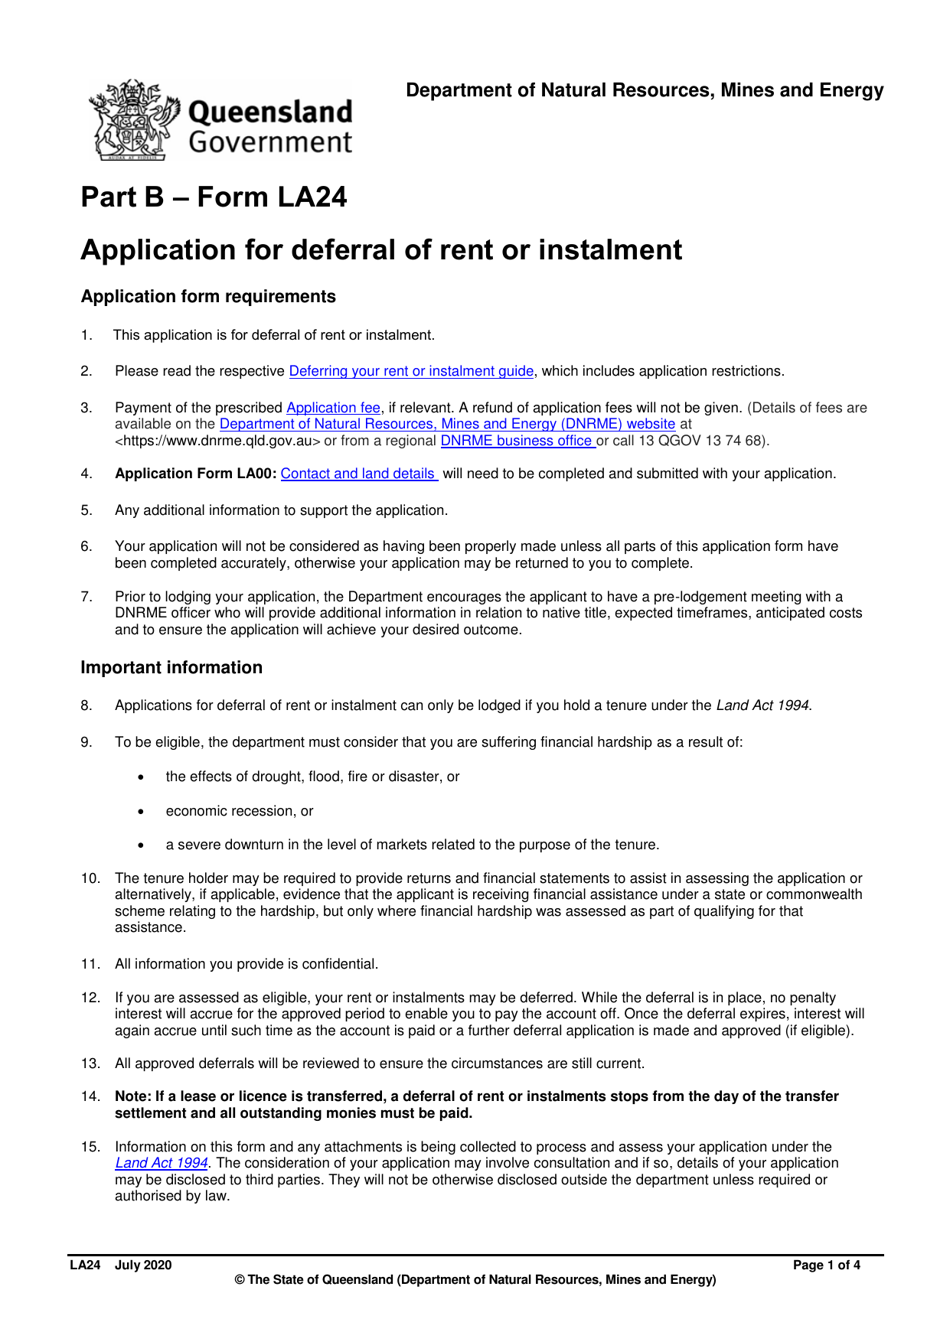 Form LA24 Part B Application for Deferral of Rent or Instalment - Queensland, Australia, Page 1